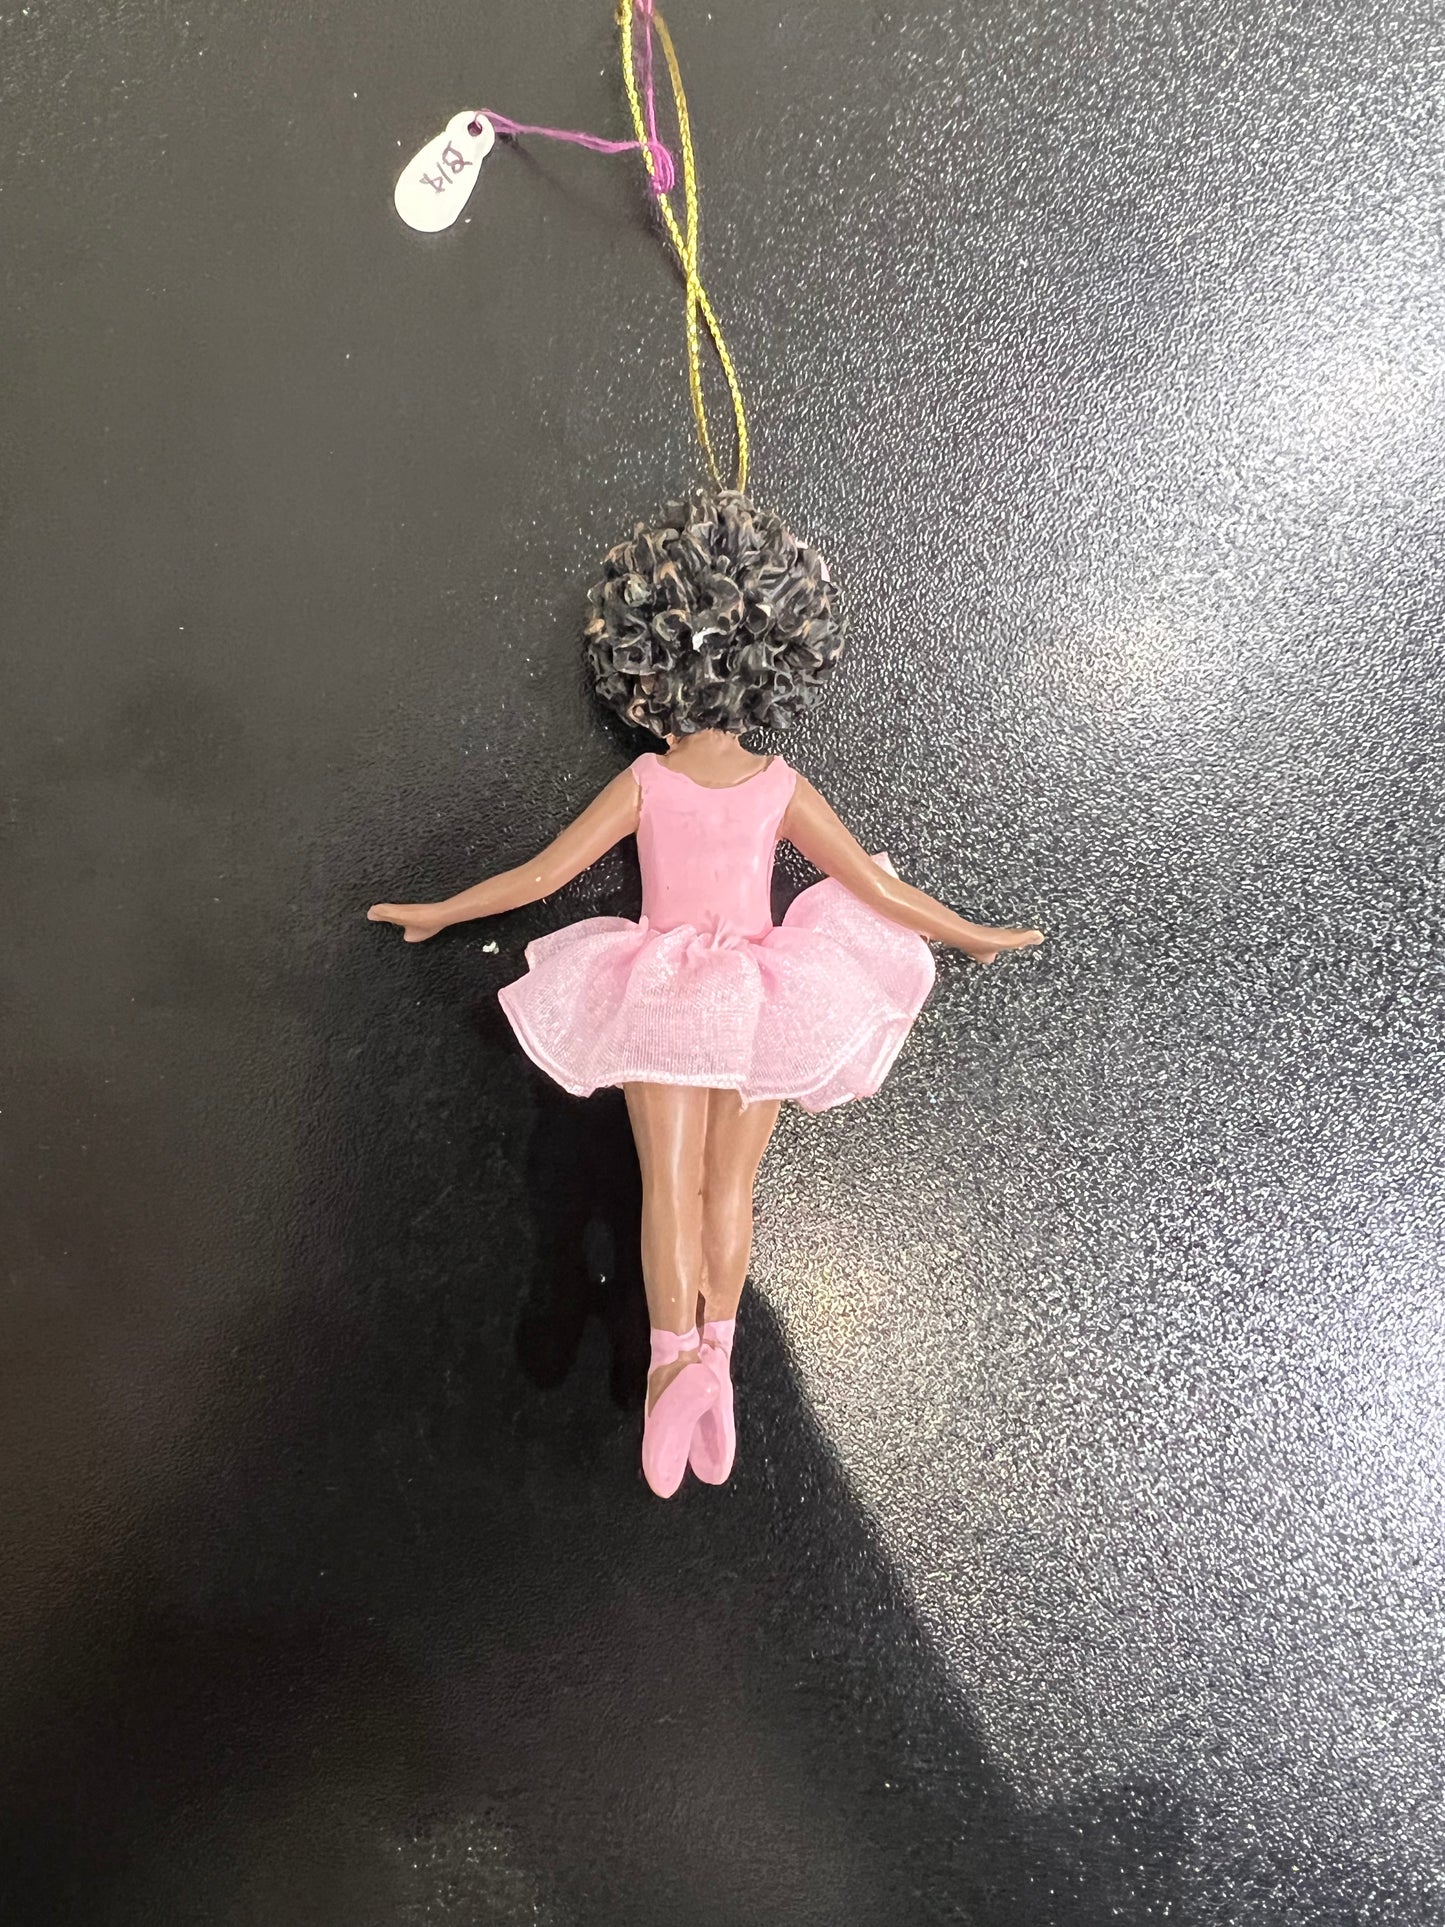 Ballerina Ornament